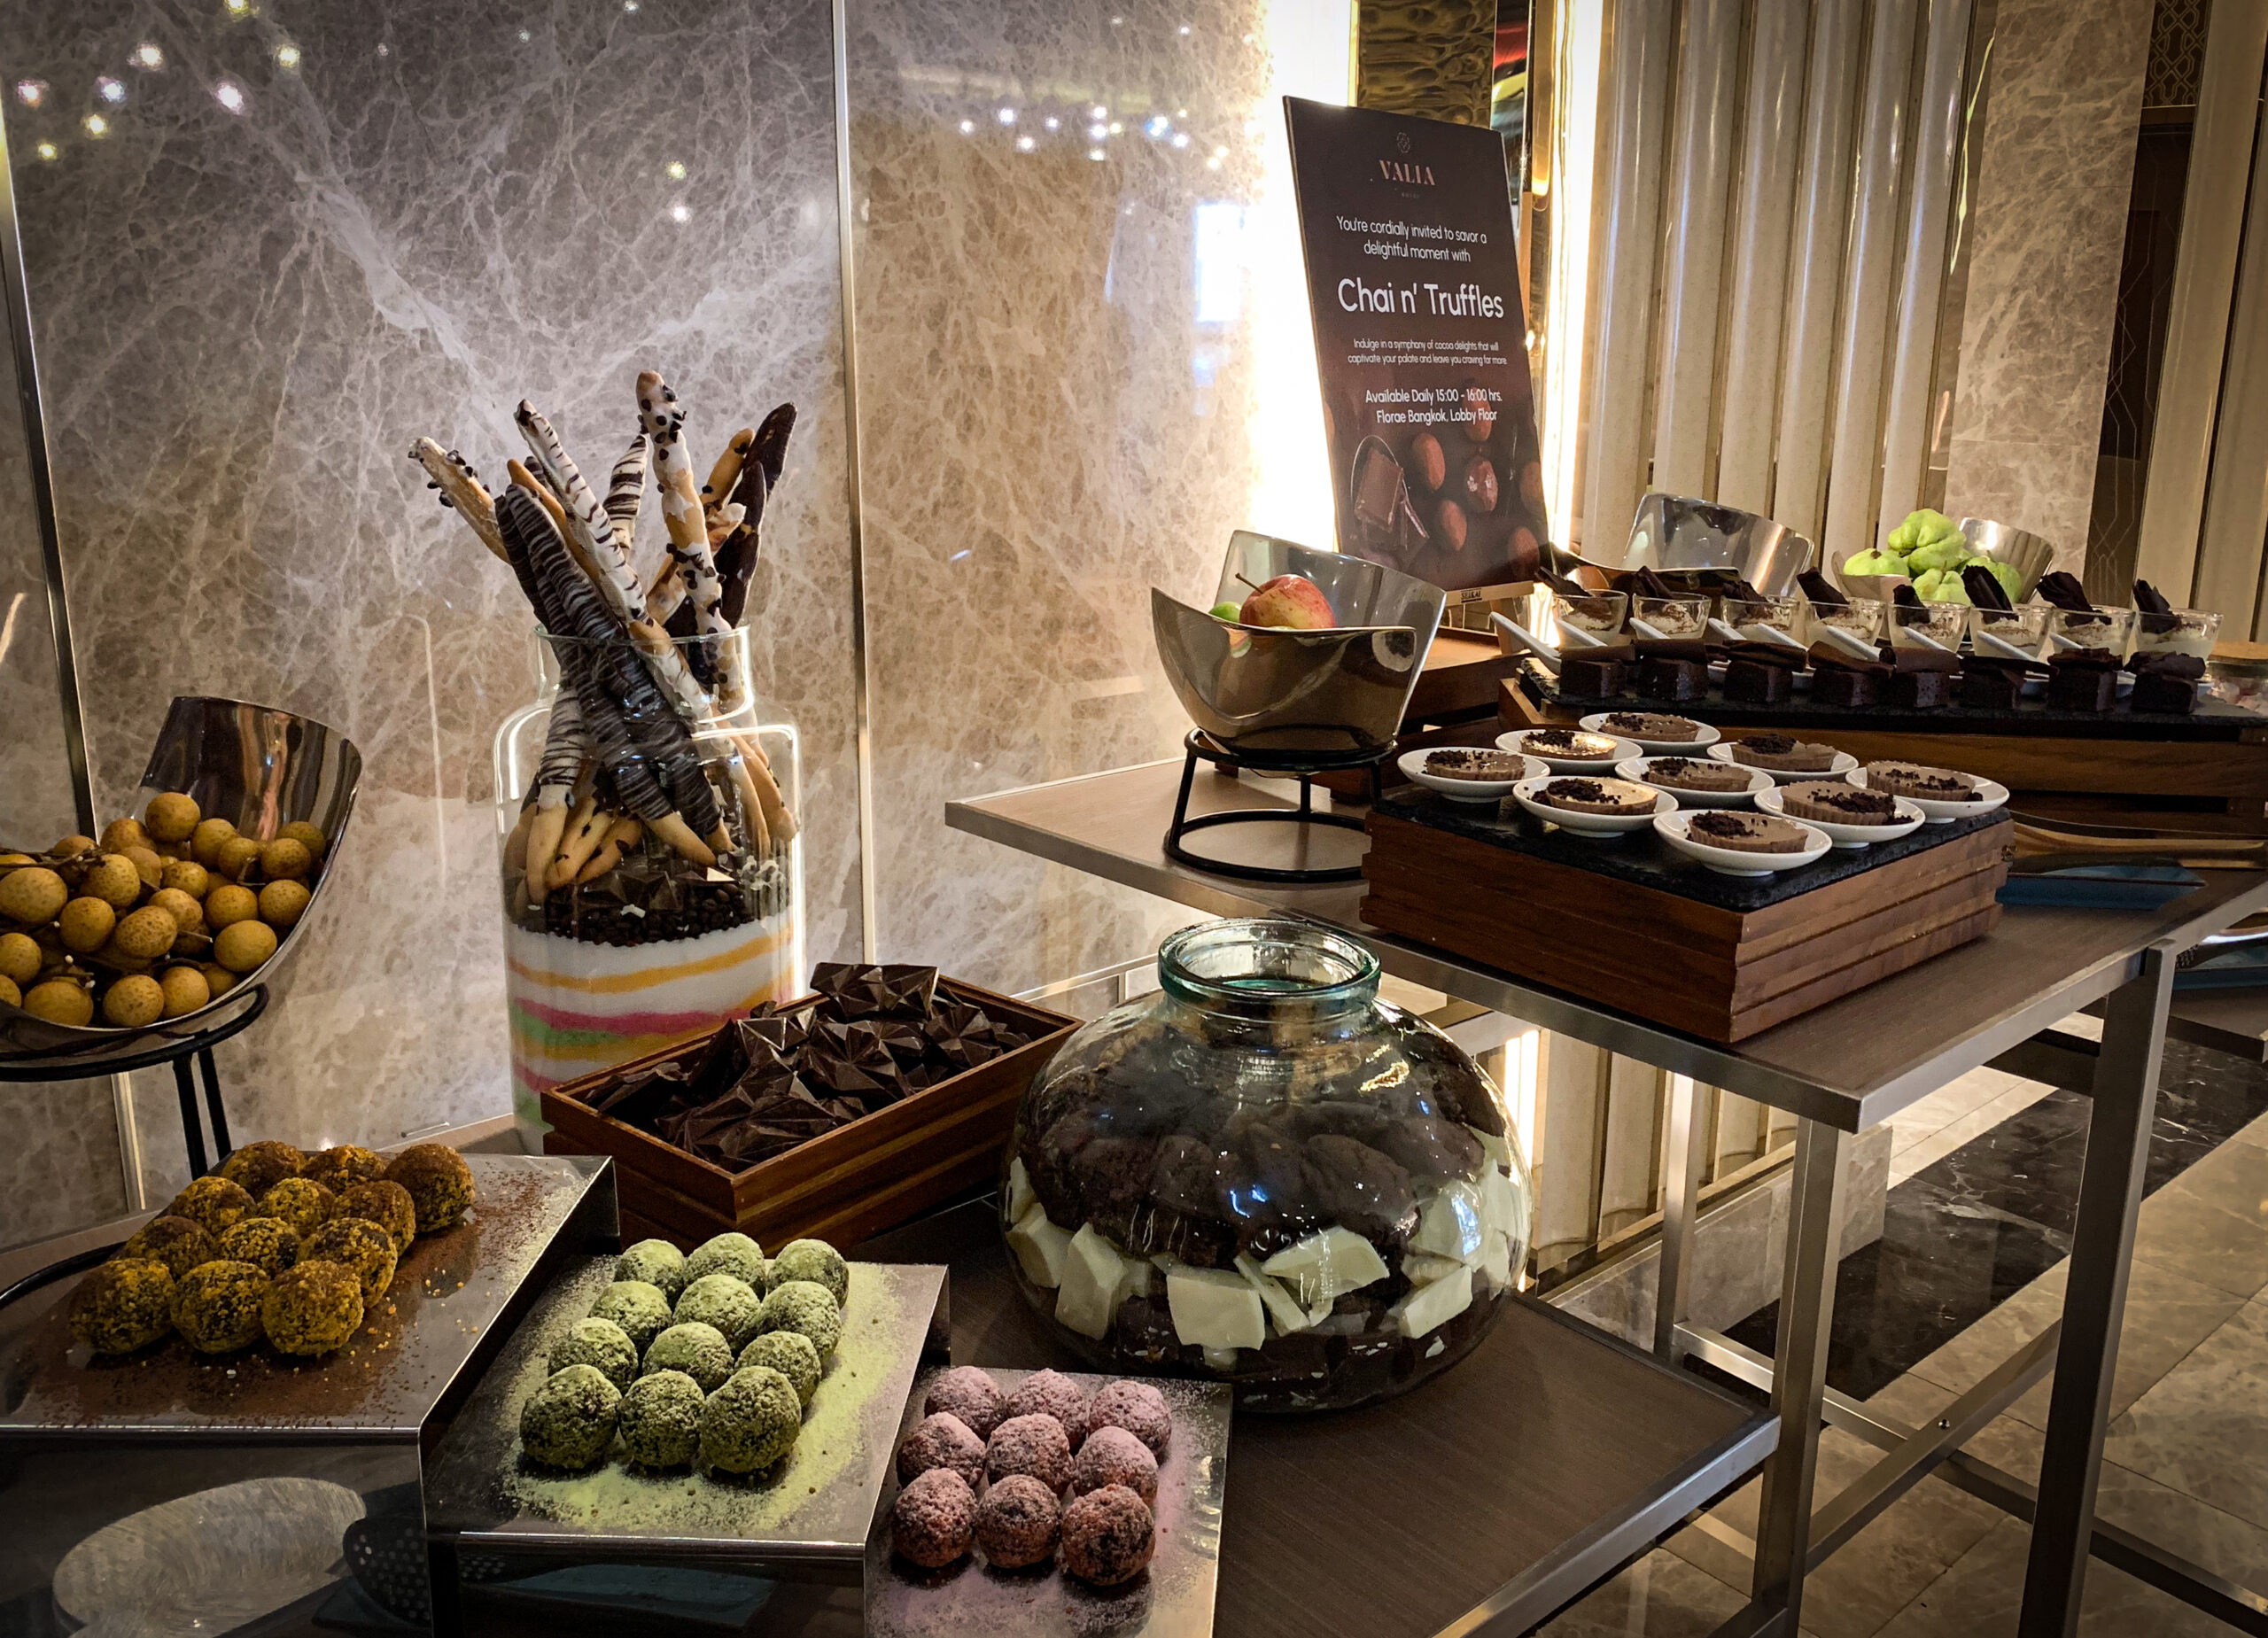 Valia Hotel Bangkok - Chai n' Truffles (chocolate buffet)